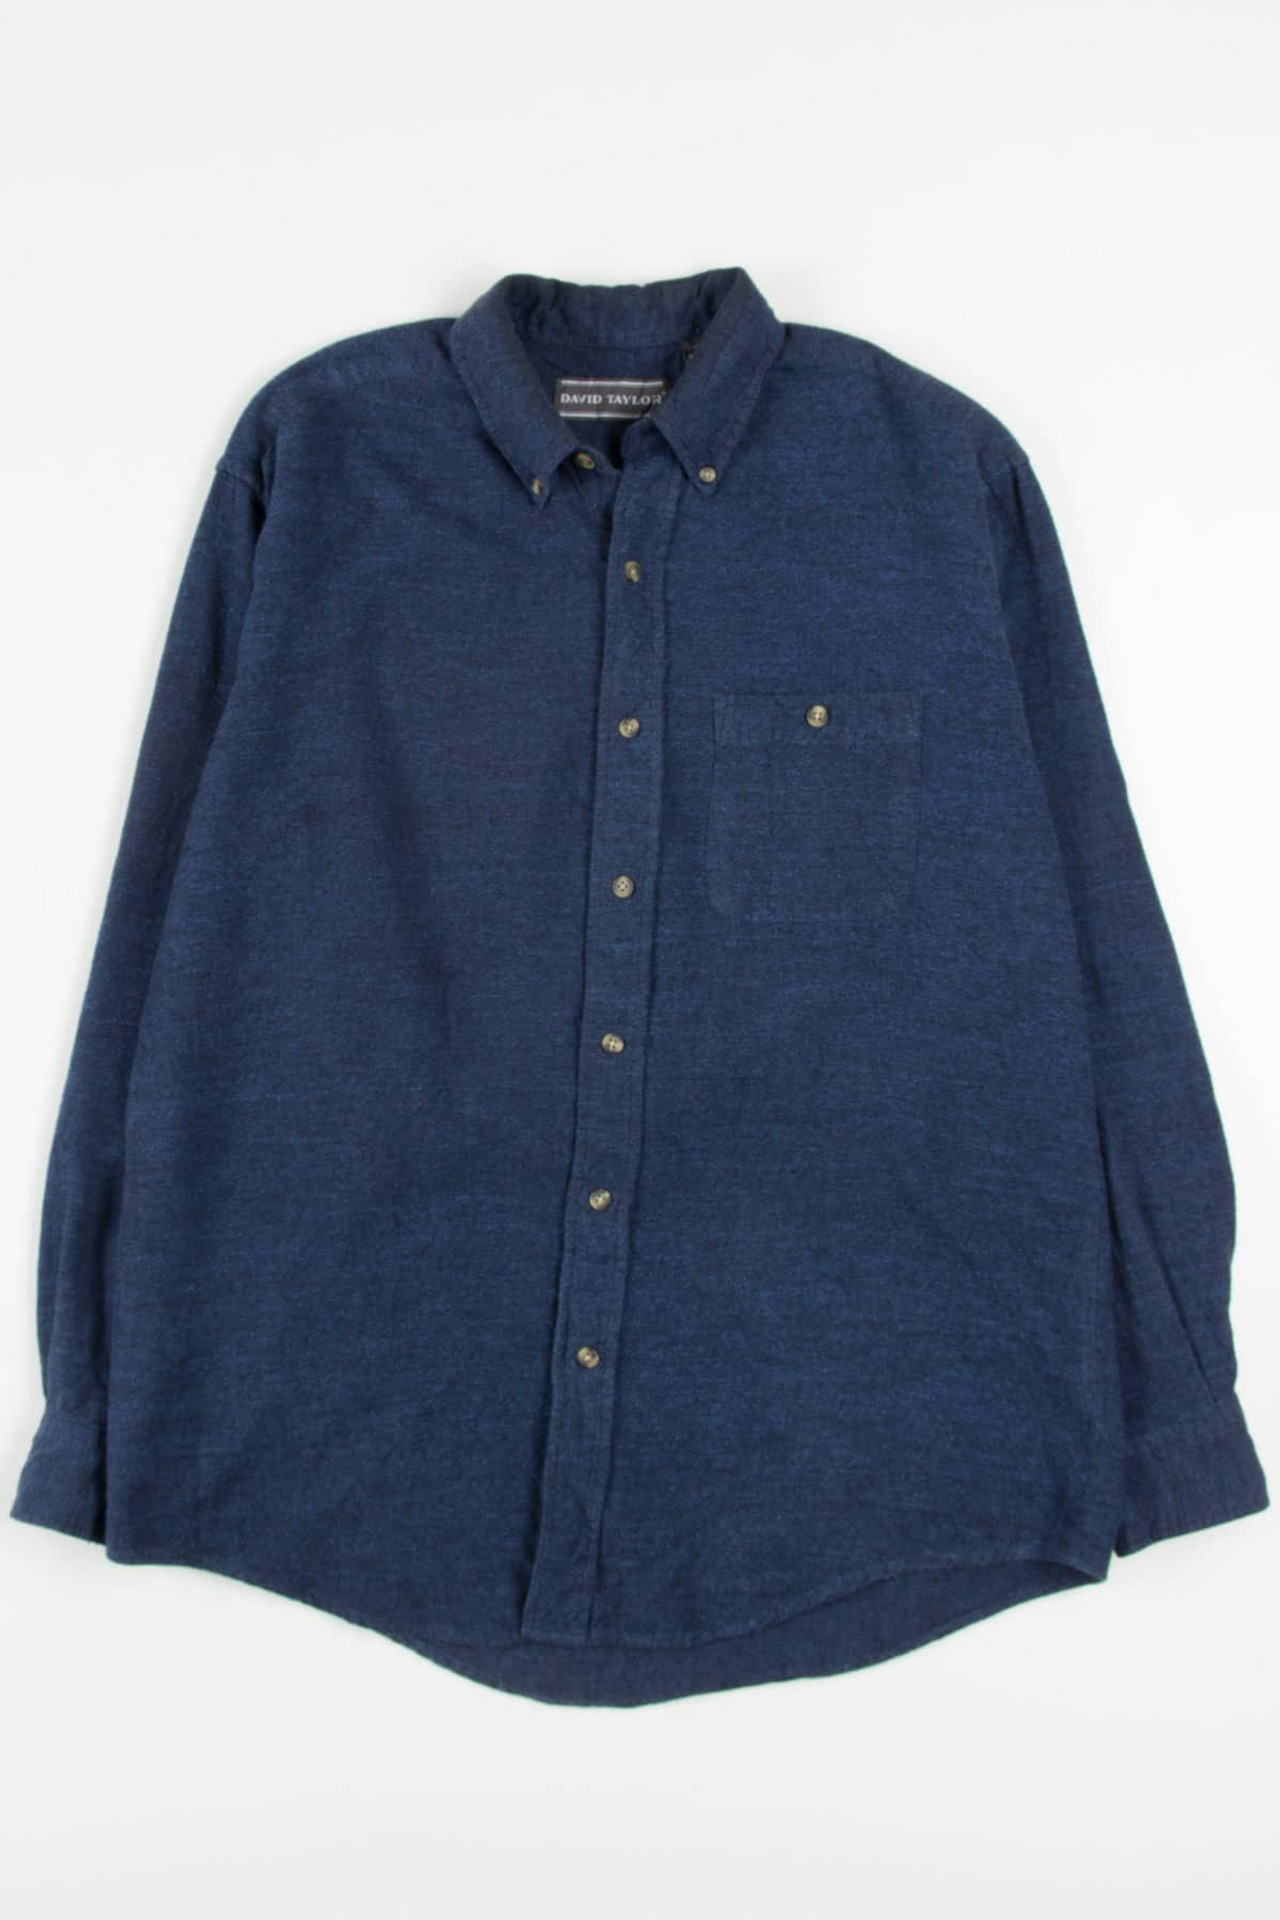 Vintage David Taylor Flannel Shirt 3695 - Ragstock.com